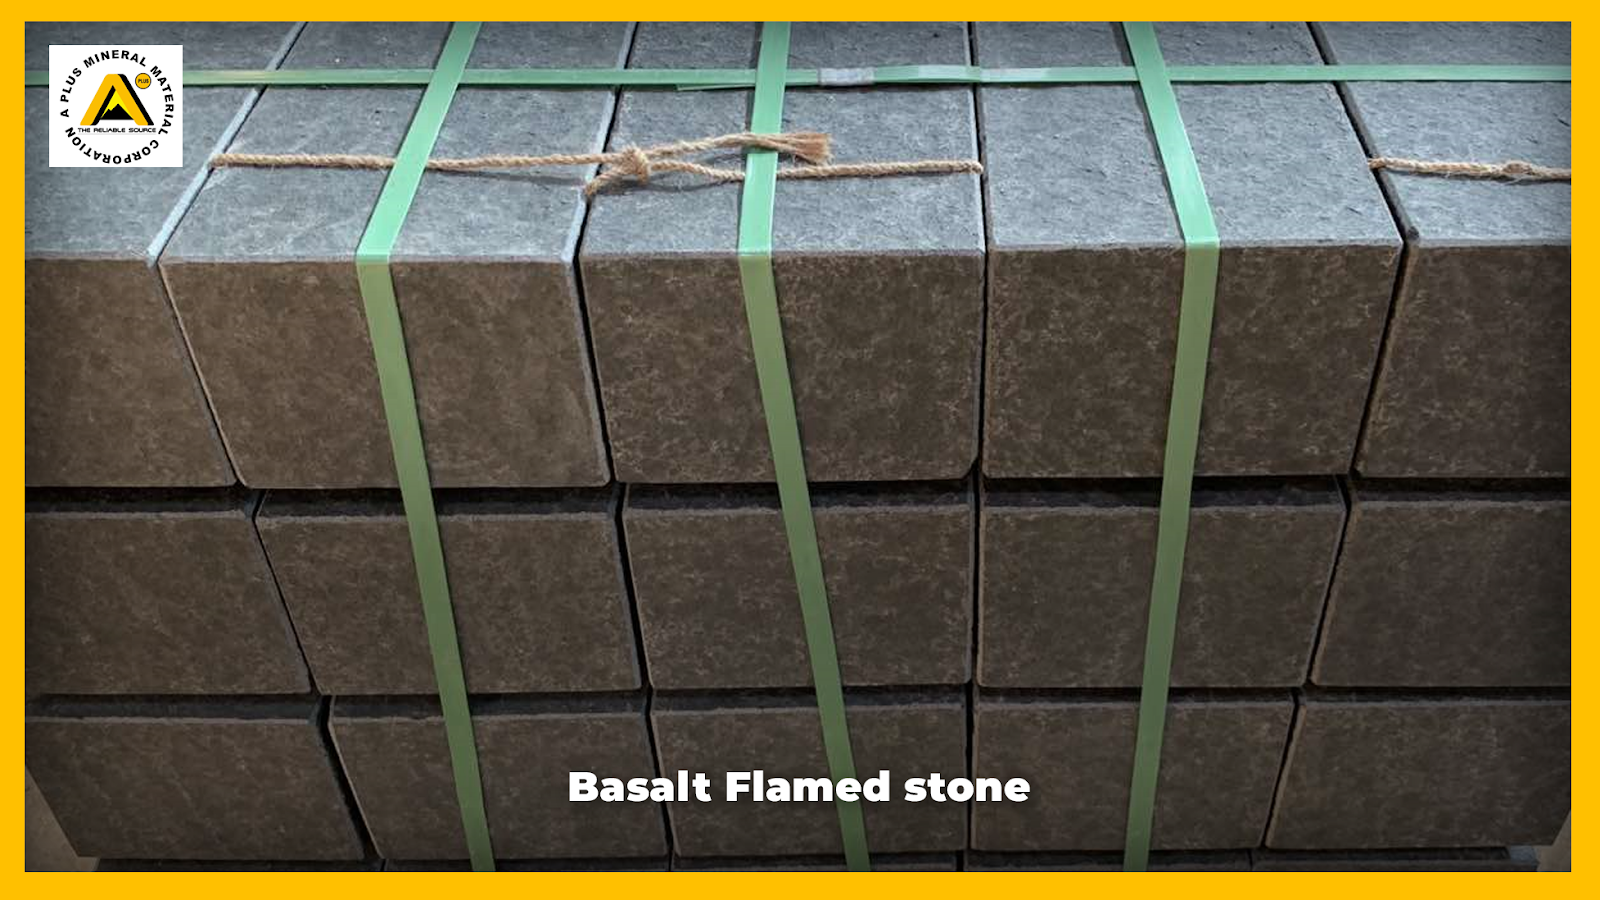 Basalt Flamed stone